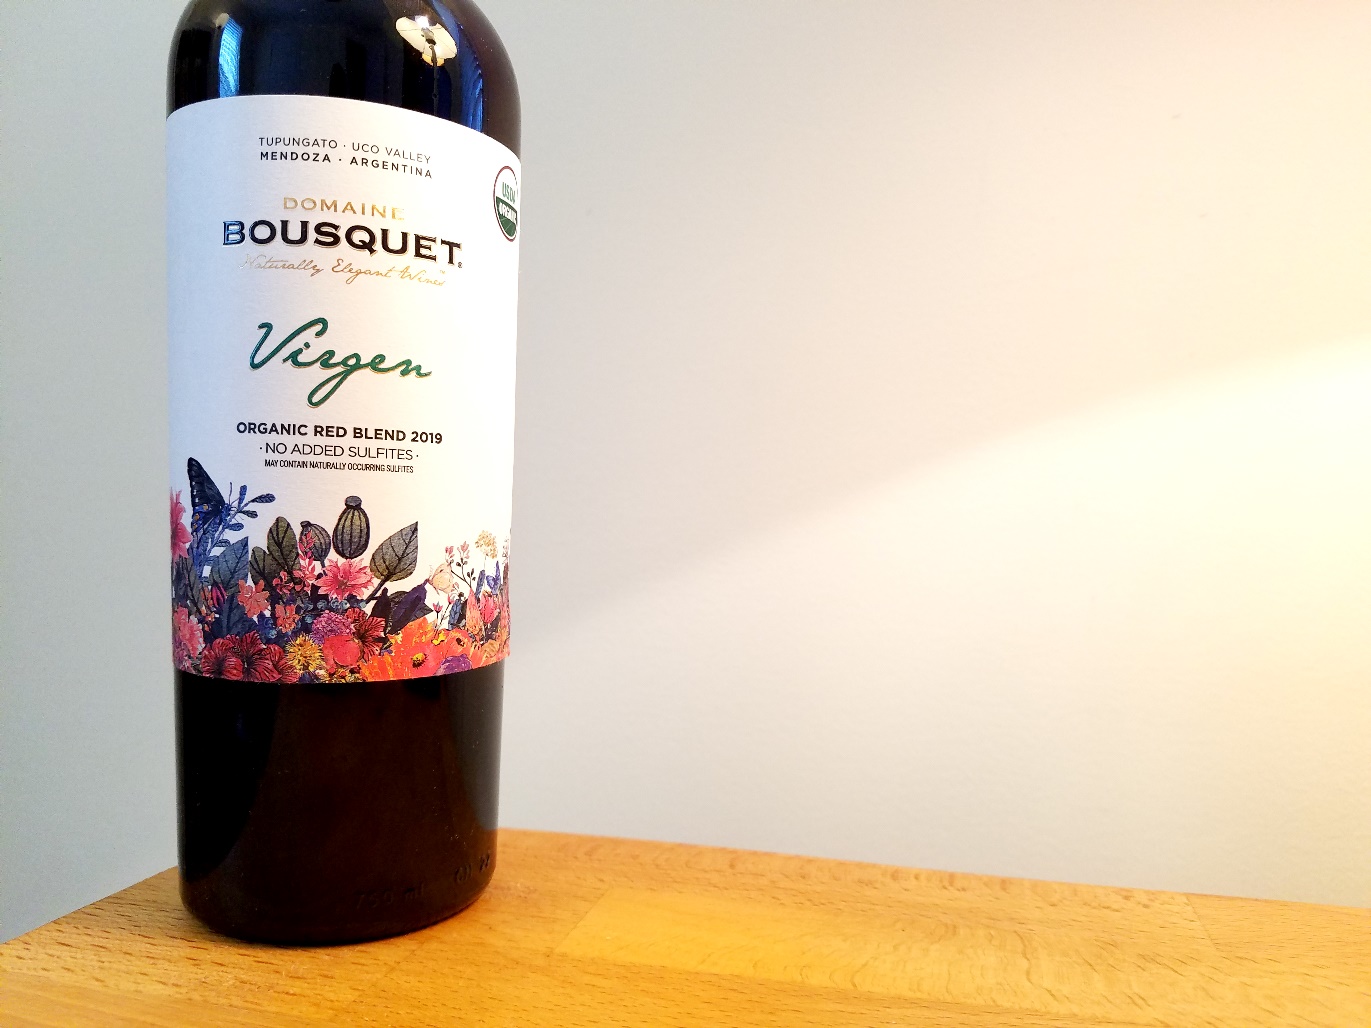 Domaine Bousquet, Virgen Organic Red Blend 2019, Tupungato, Uco Valley, Mendoza, Argentina, Wine Casual